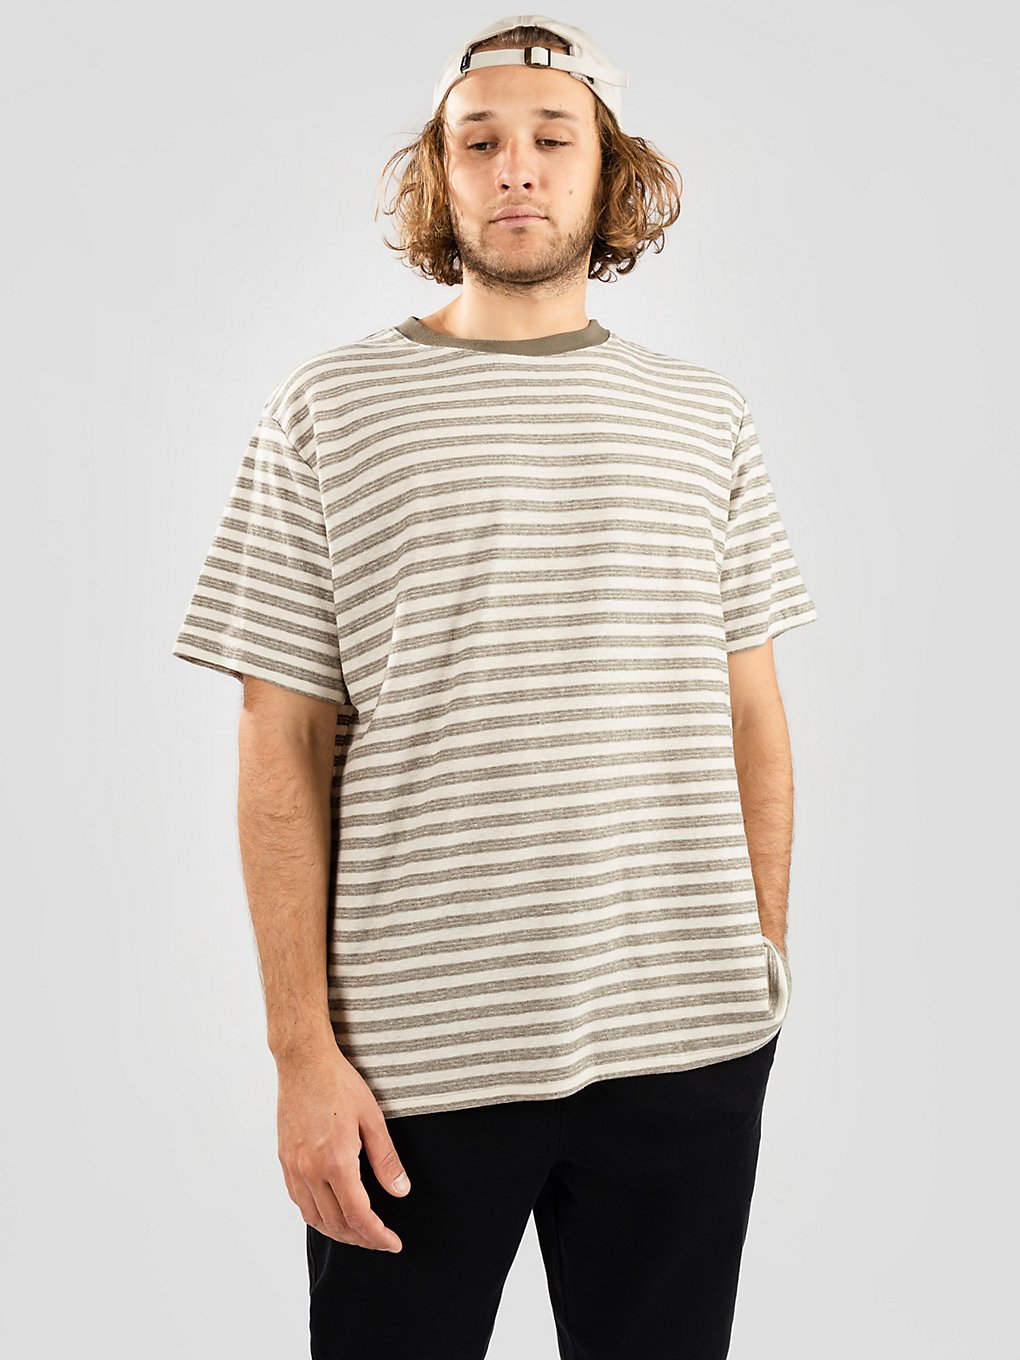 Rhythm Endure Stripe Vintage T-Shirt patroon